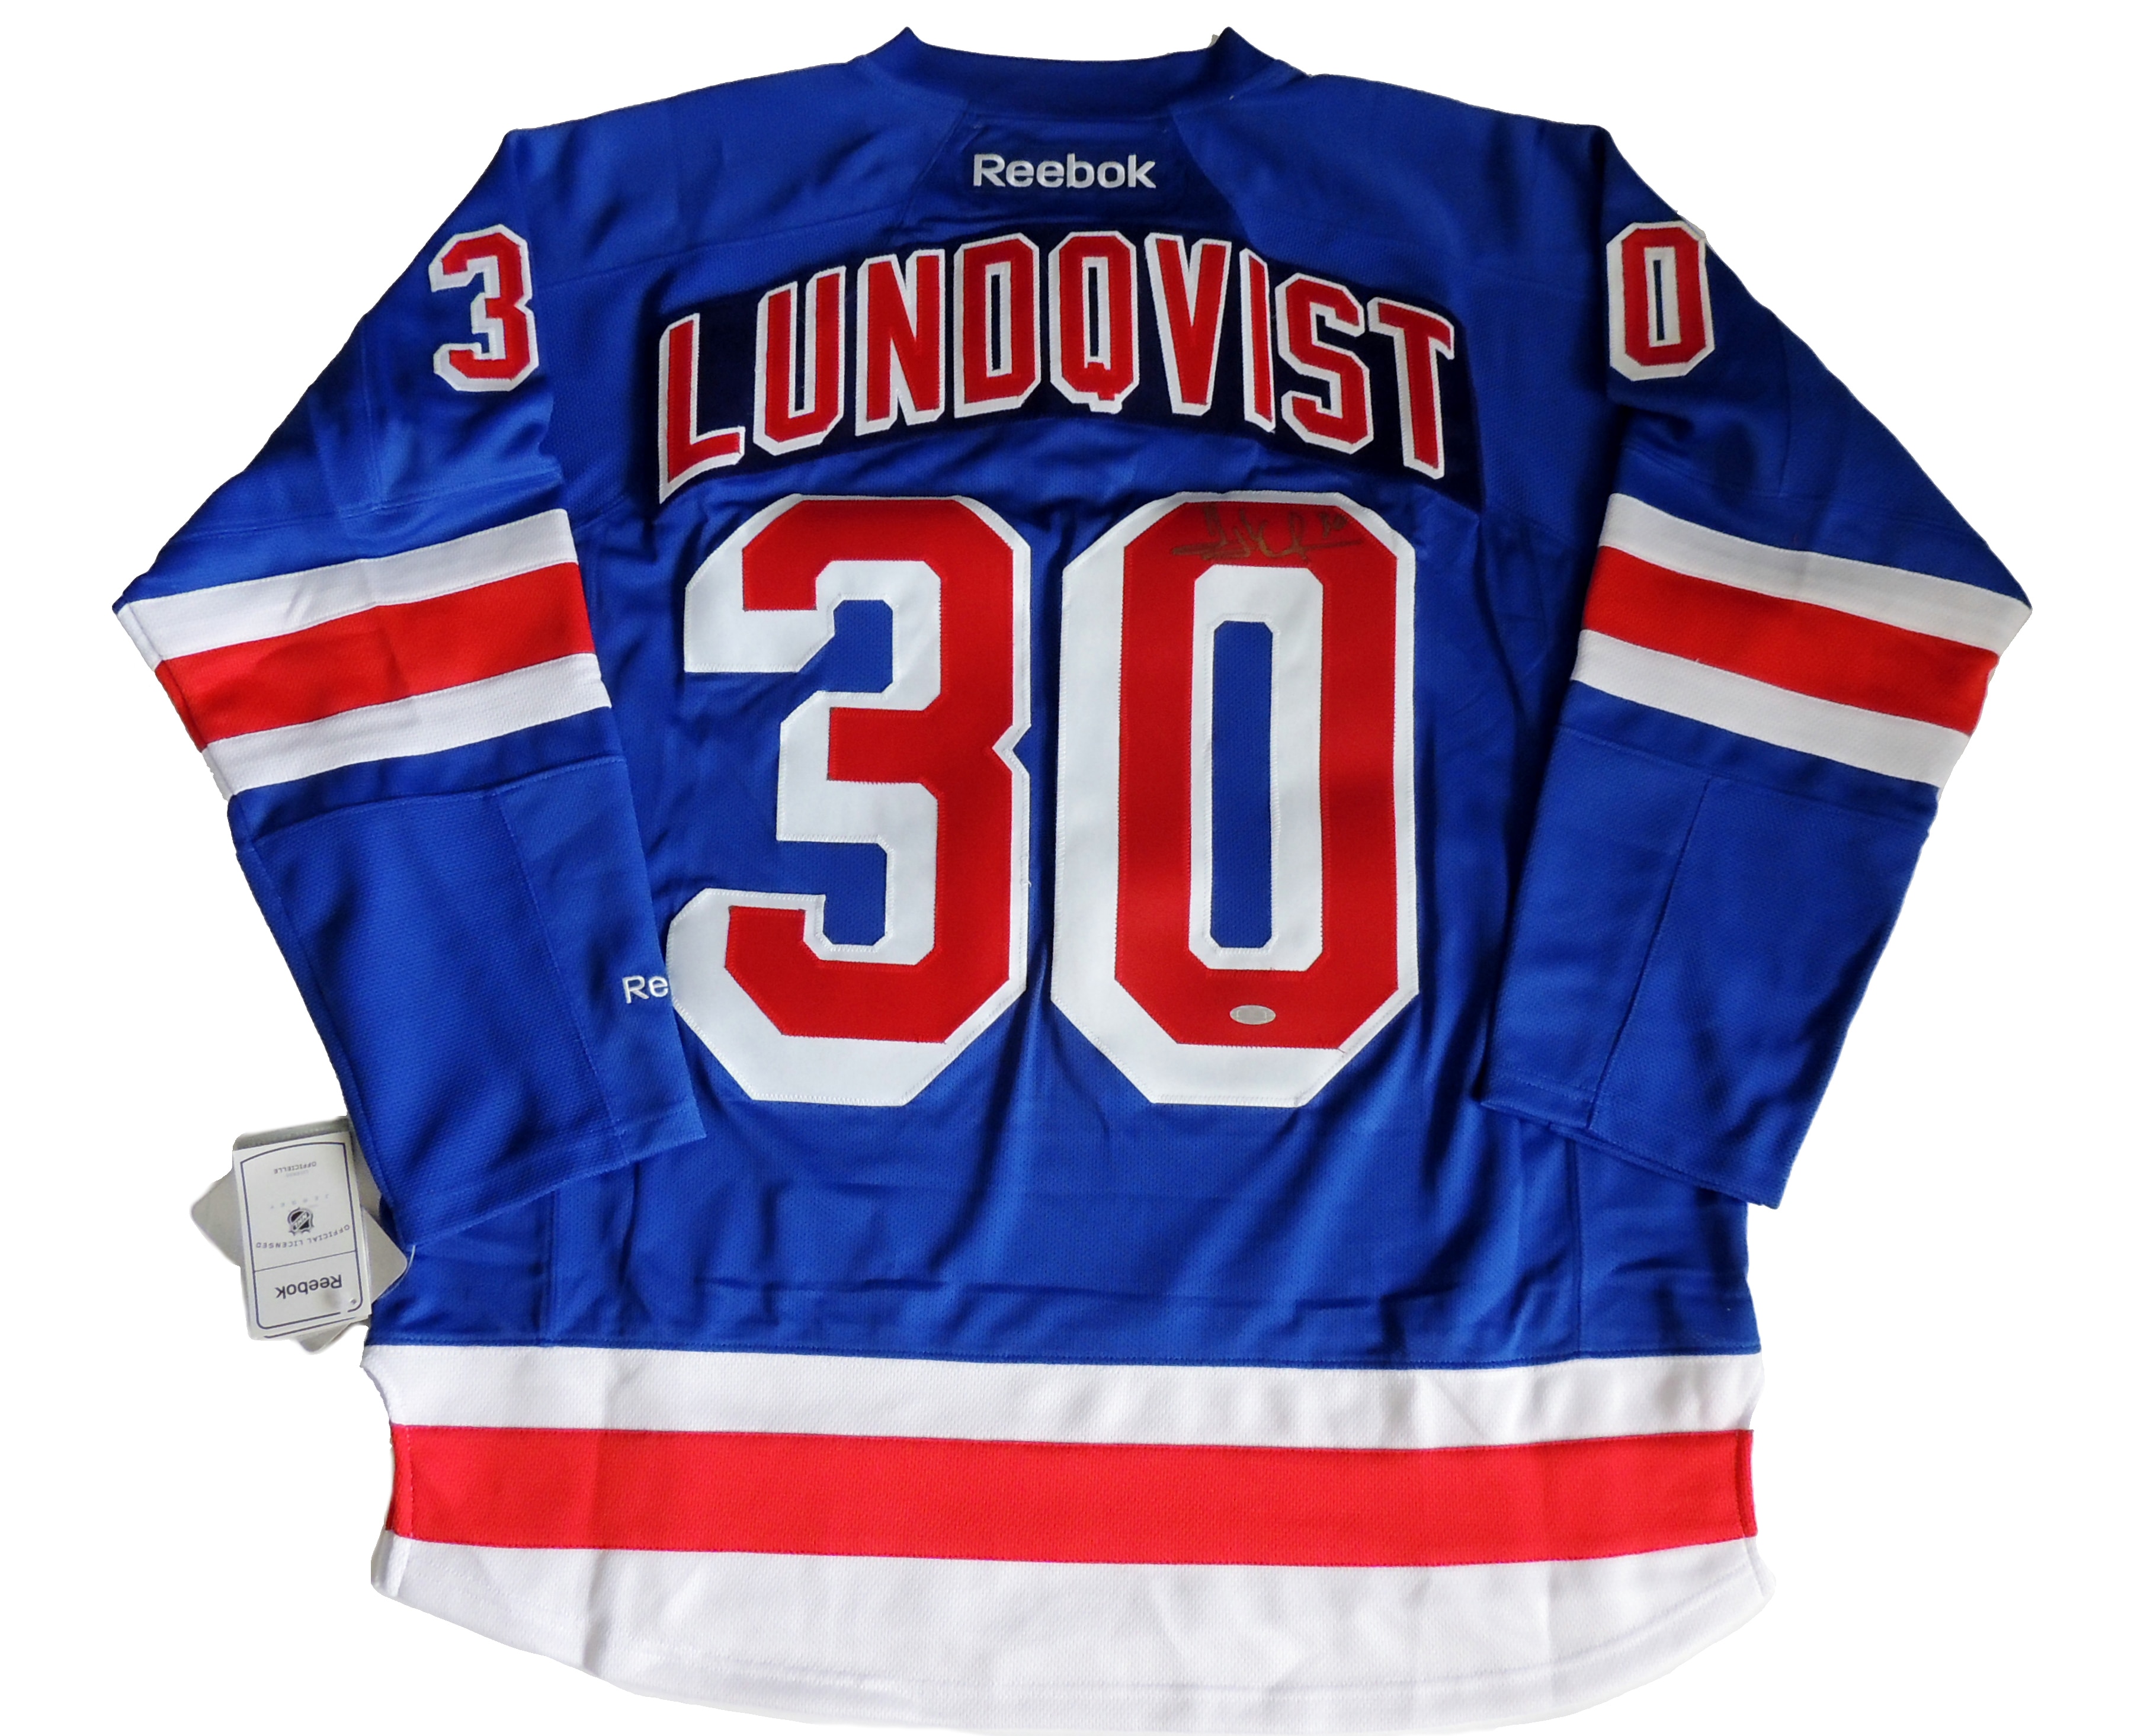 lundqvist signed jersey